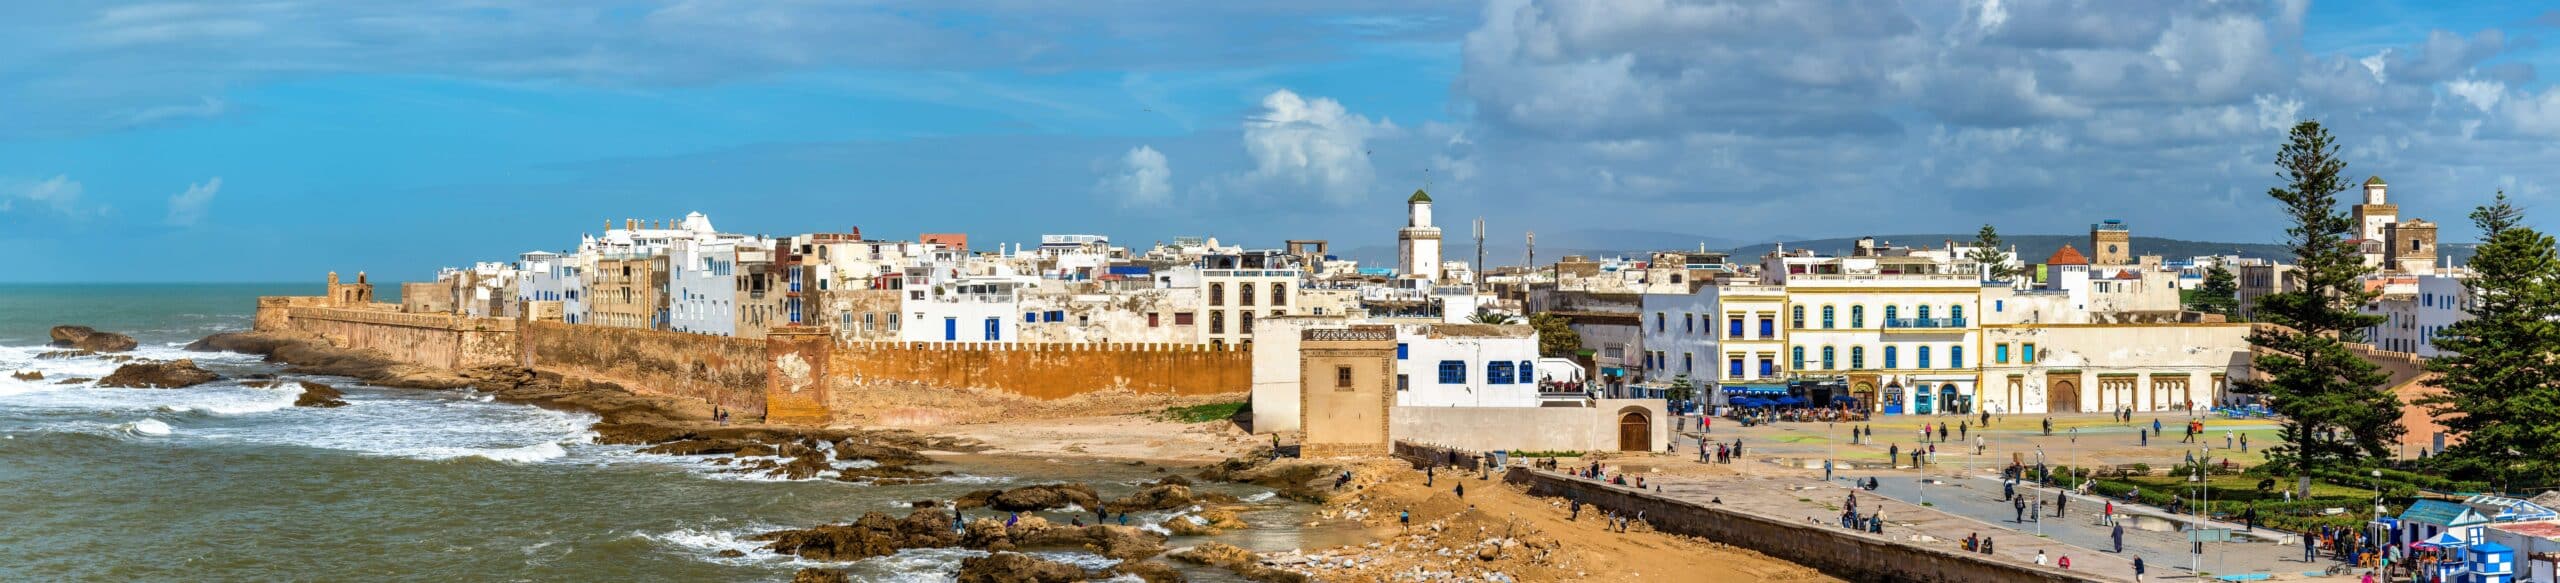 Essaouira UNESCO world heritage site in Morocco